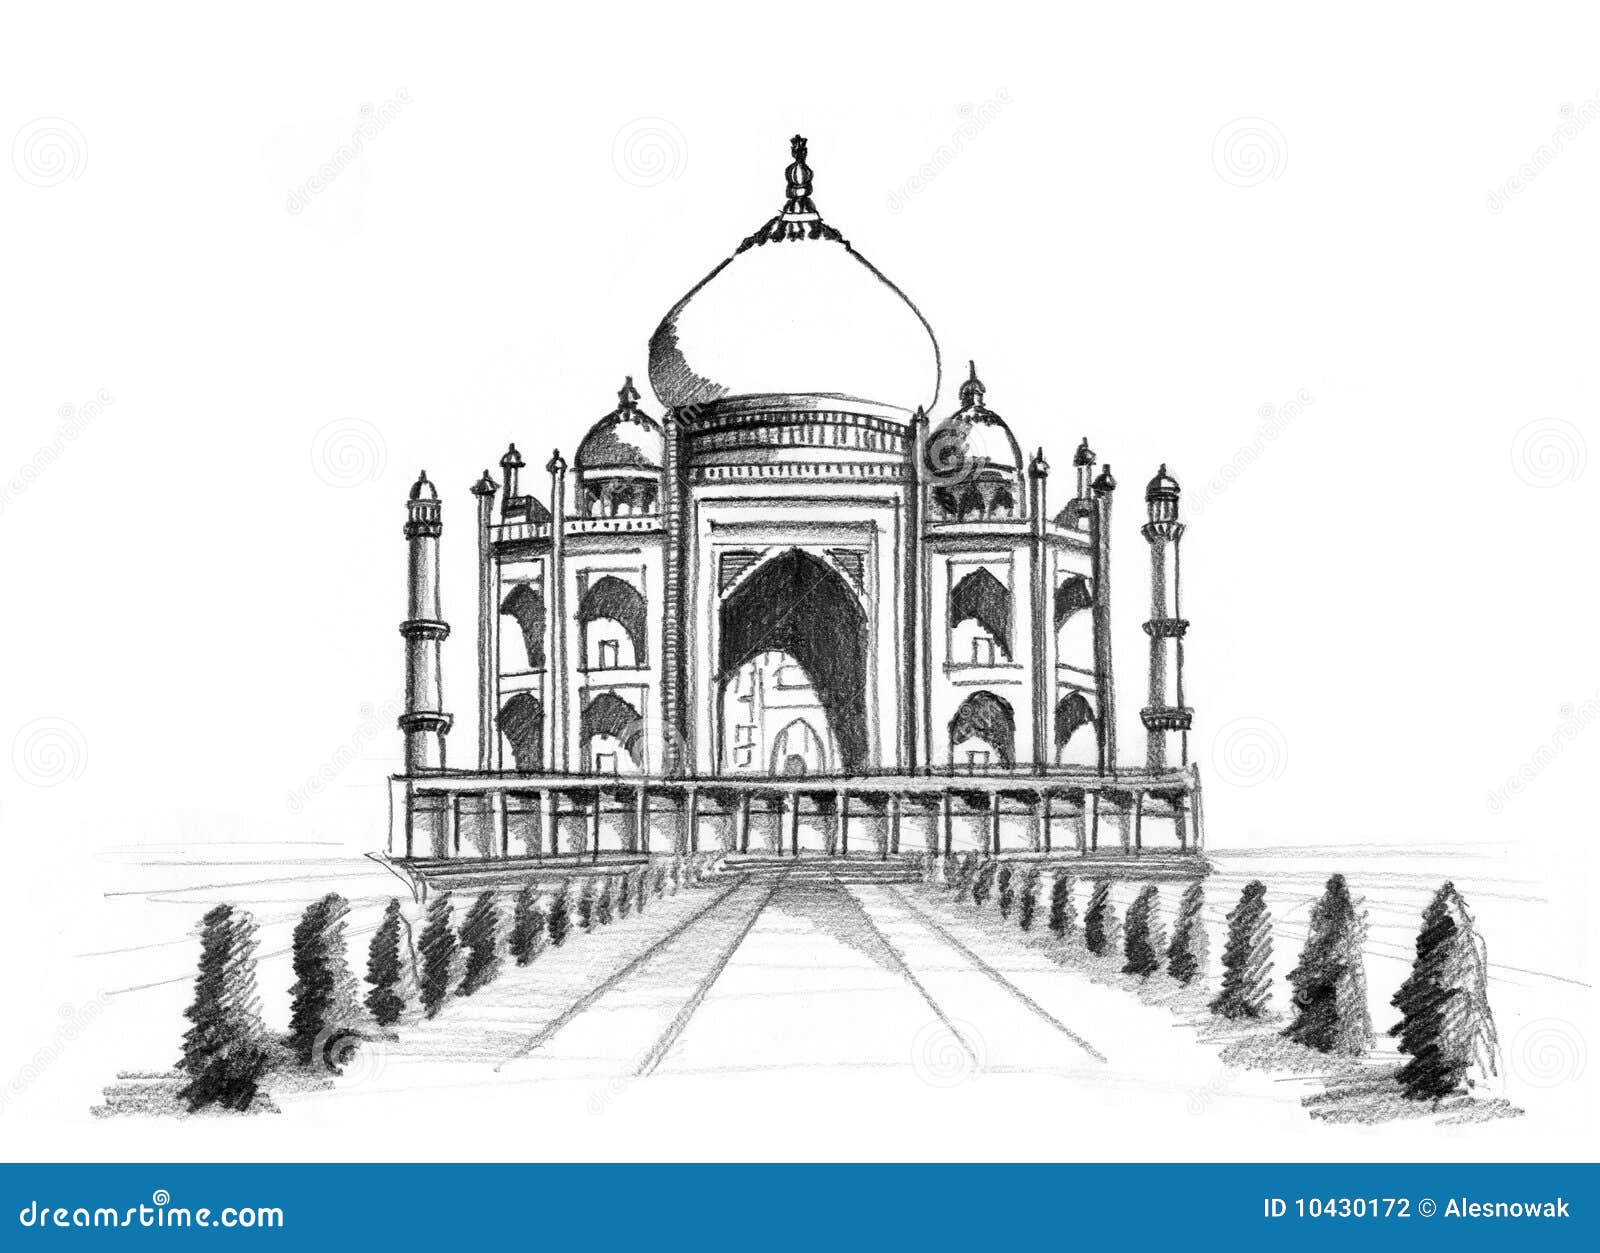 Taj Mahal sketch  ink on paper  Kelly Goss Art